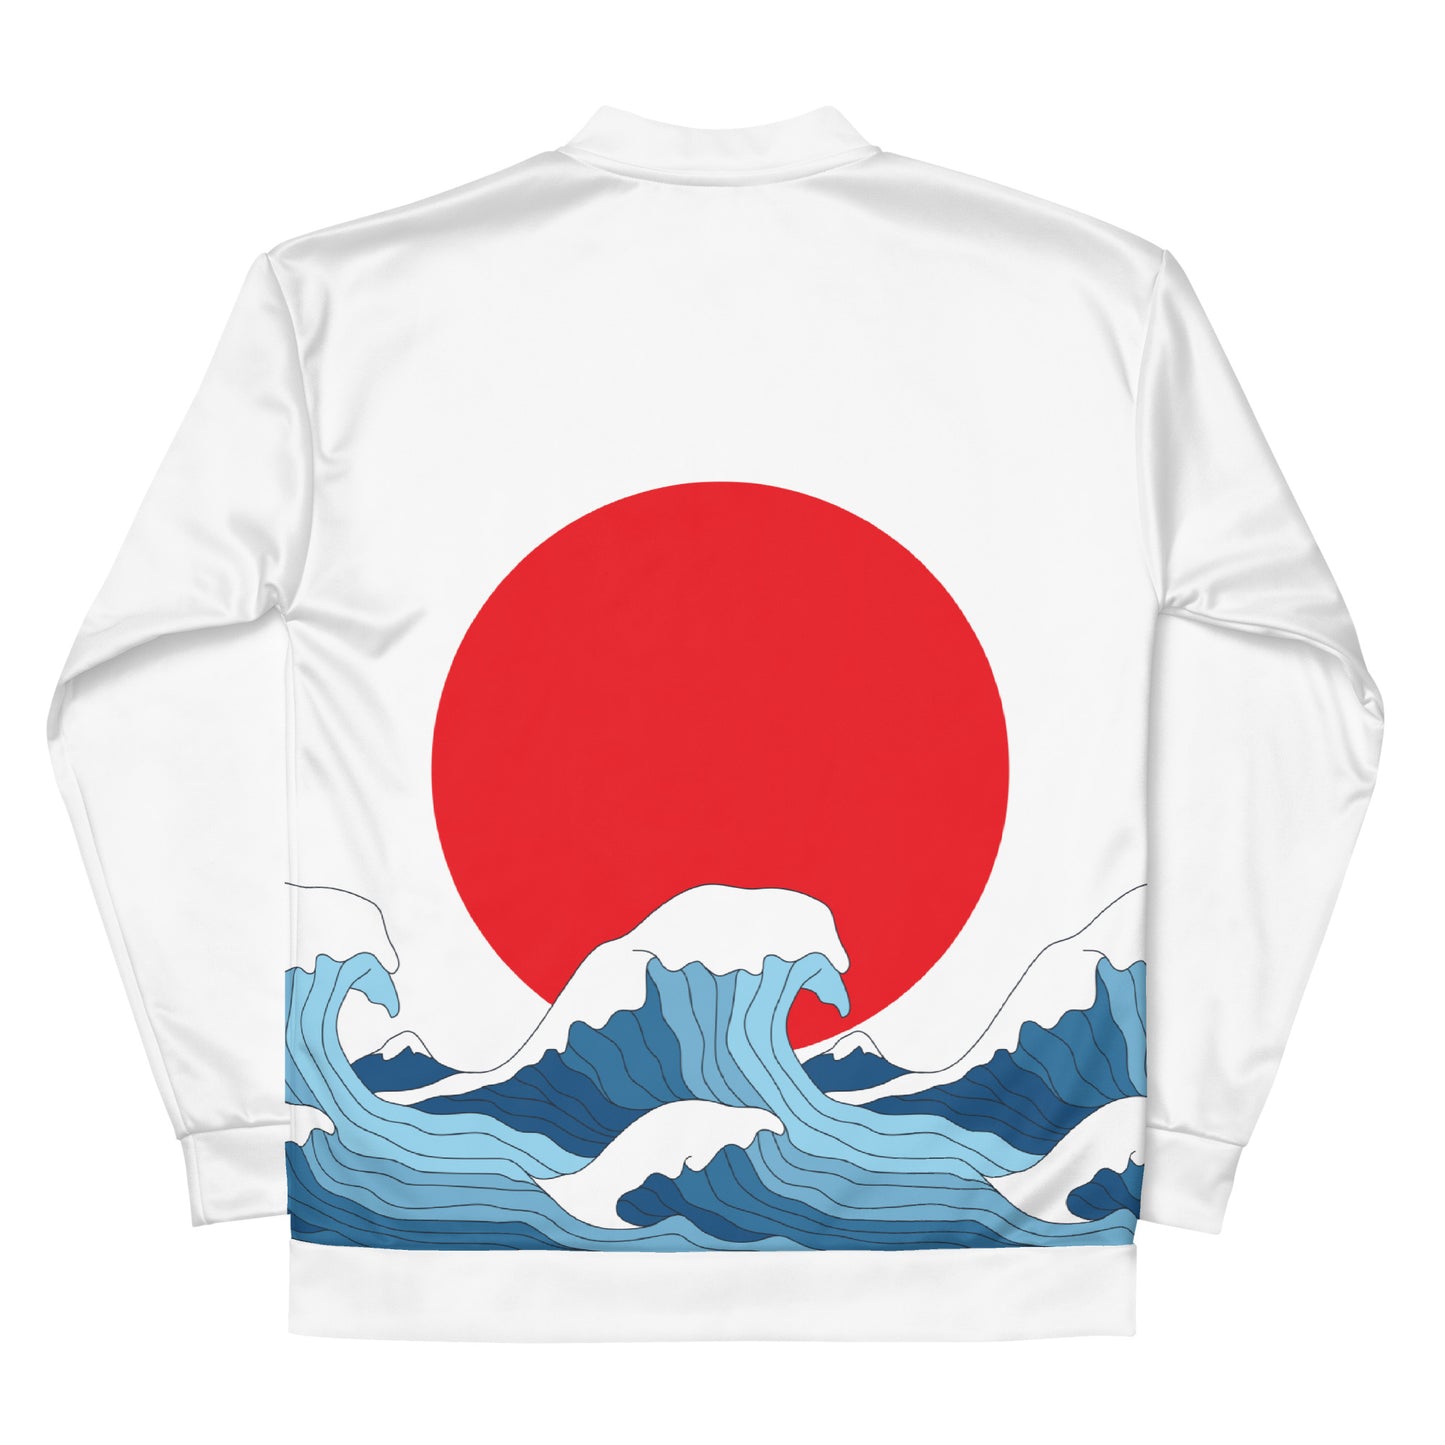 Japan - Sustainably Made Jacket